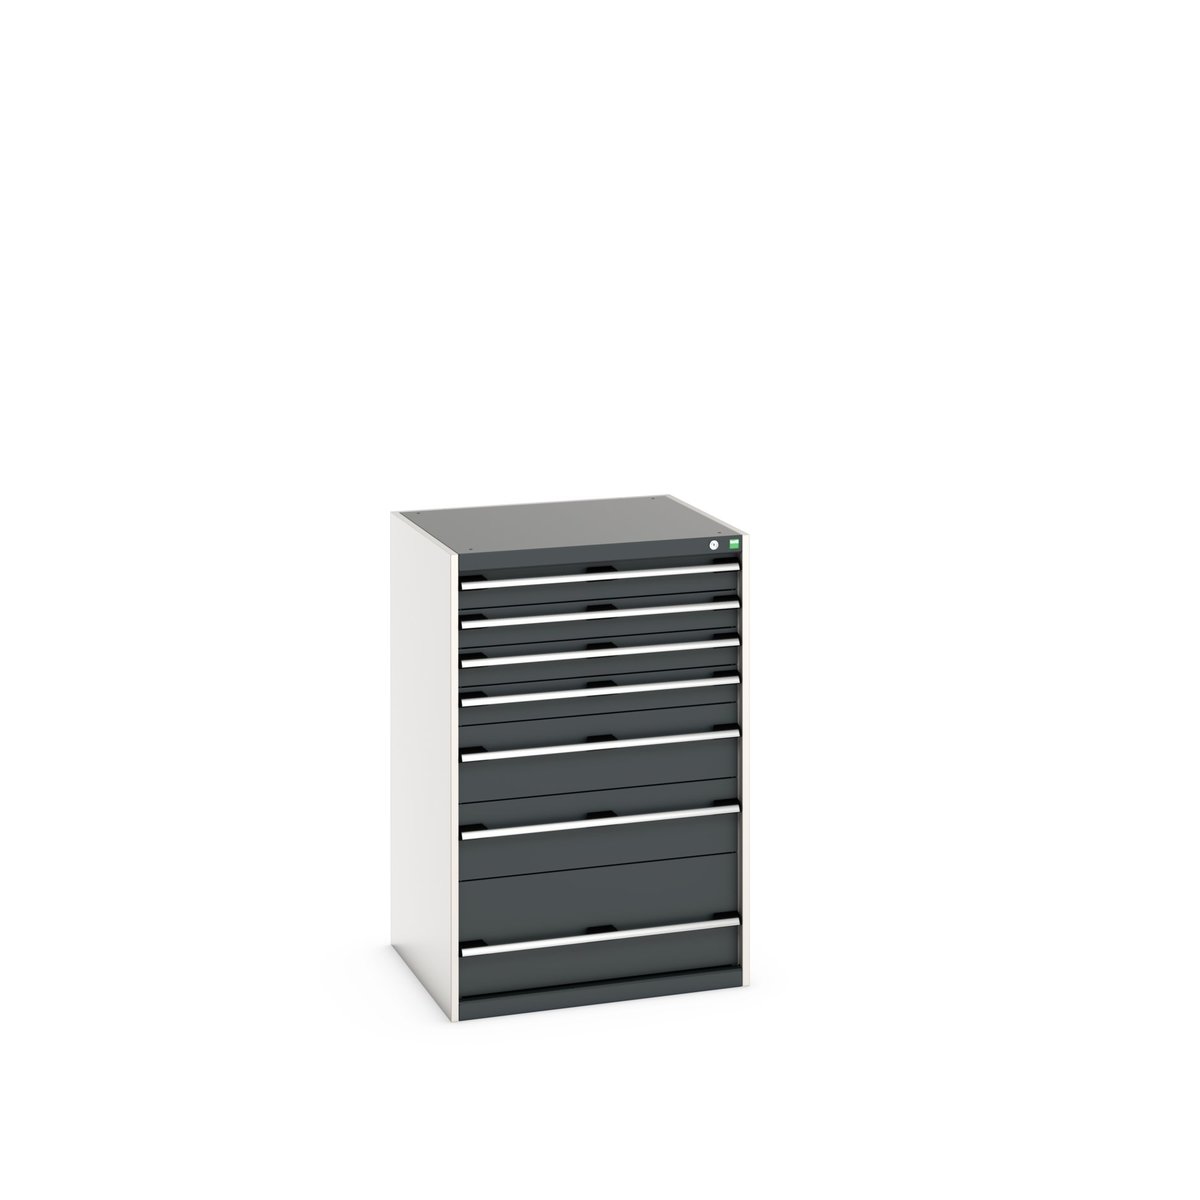 40028031. - cubio drawer cabinet 